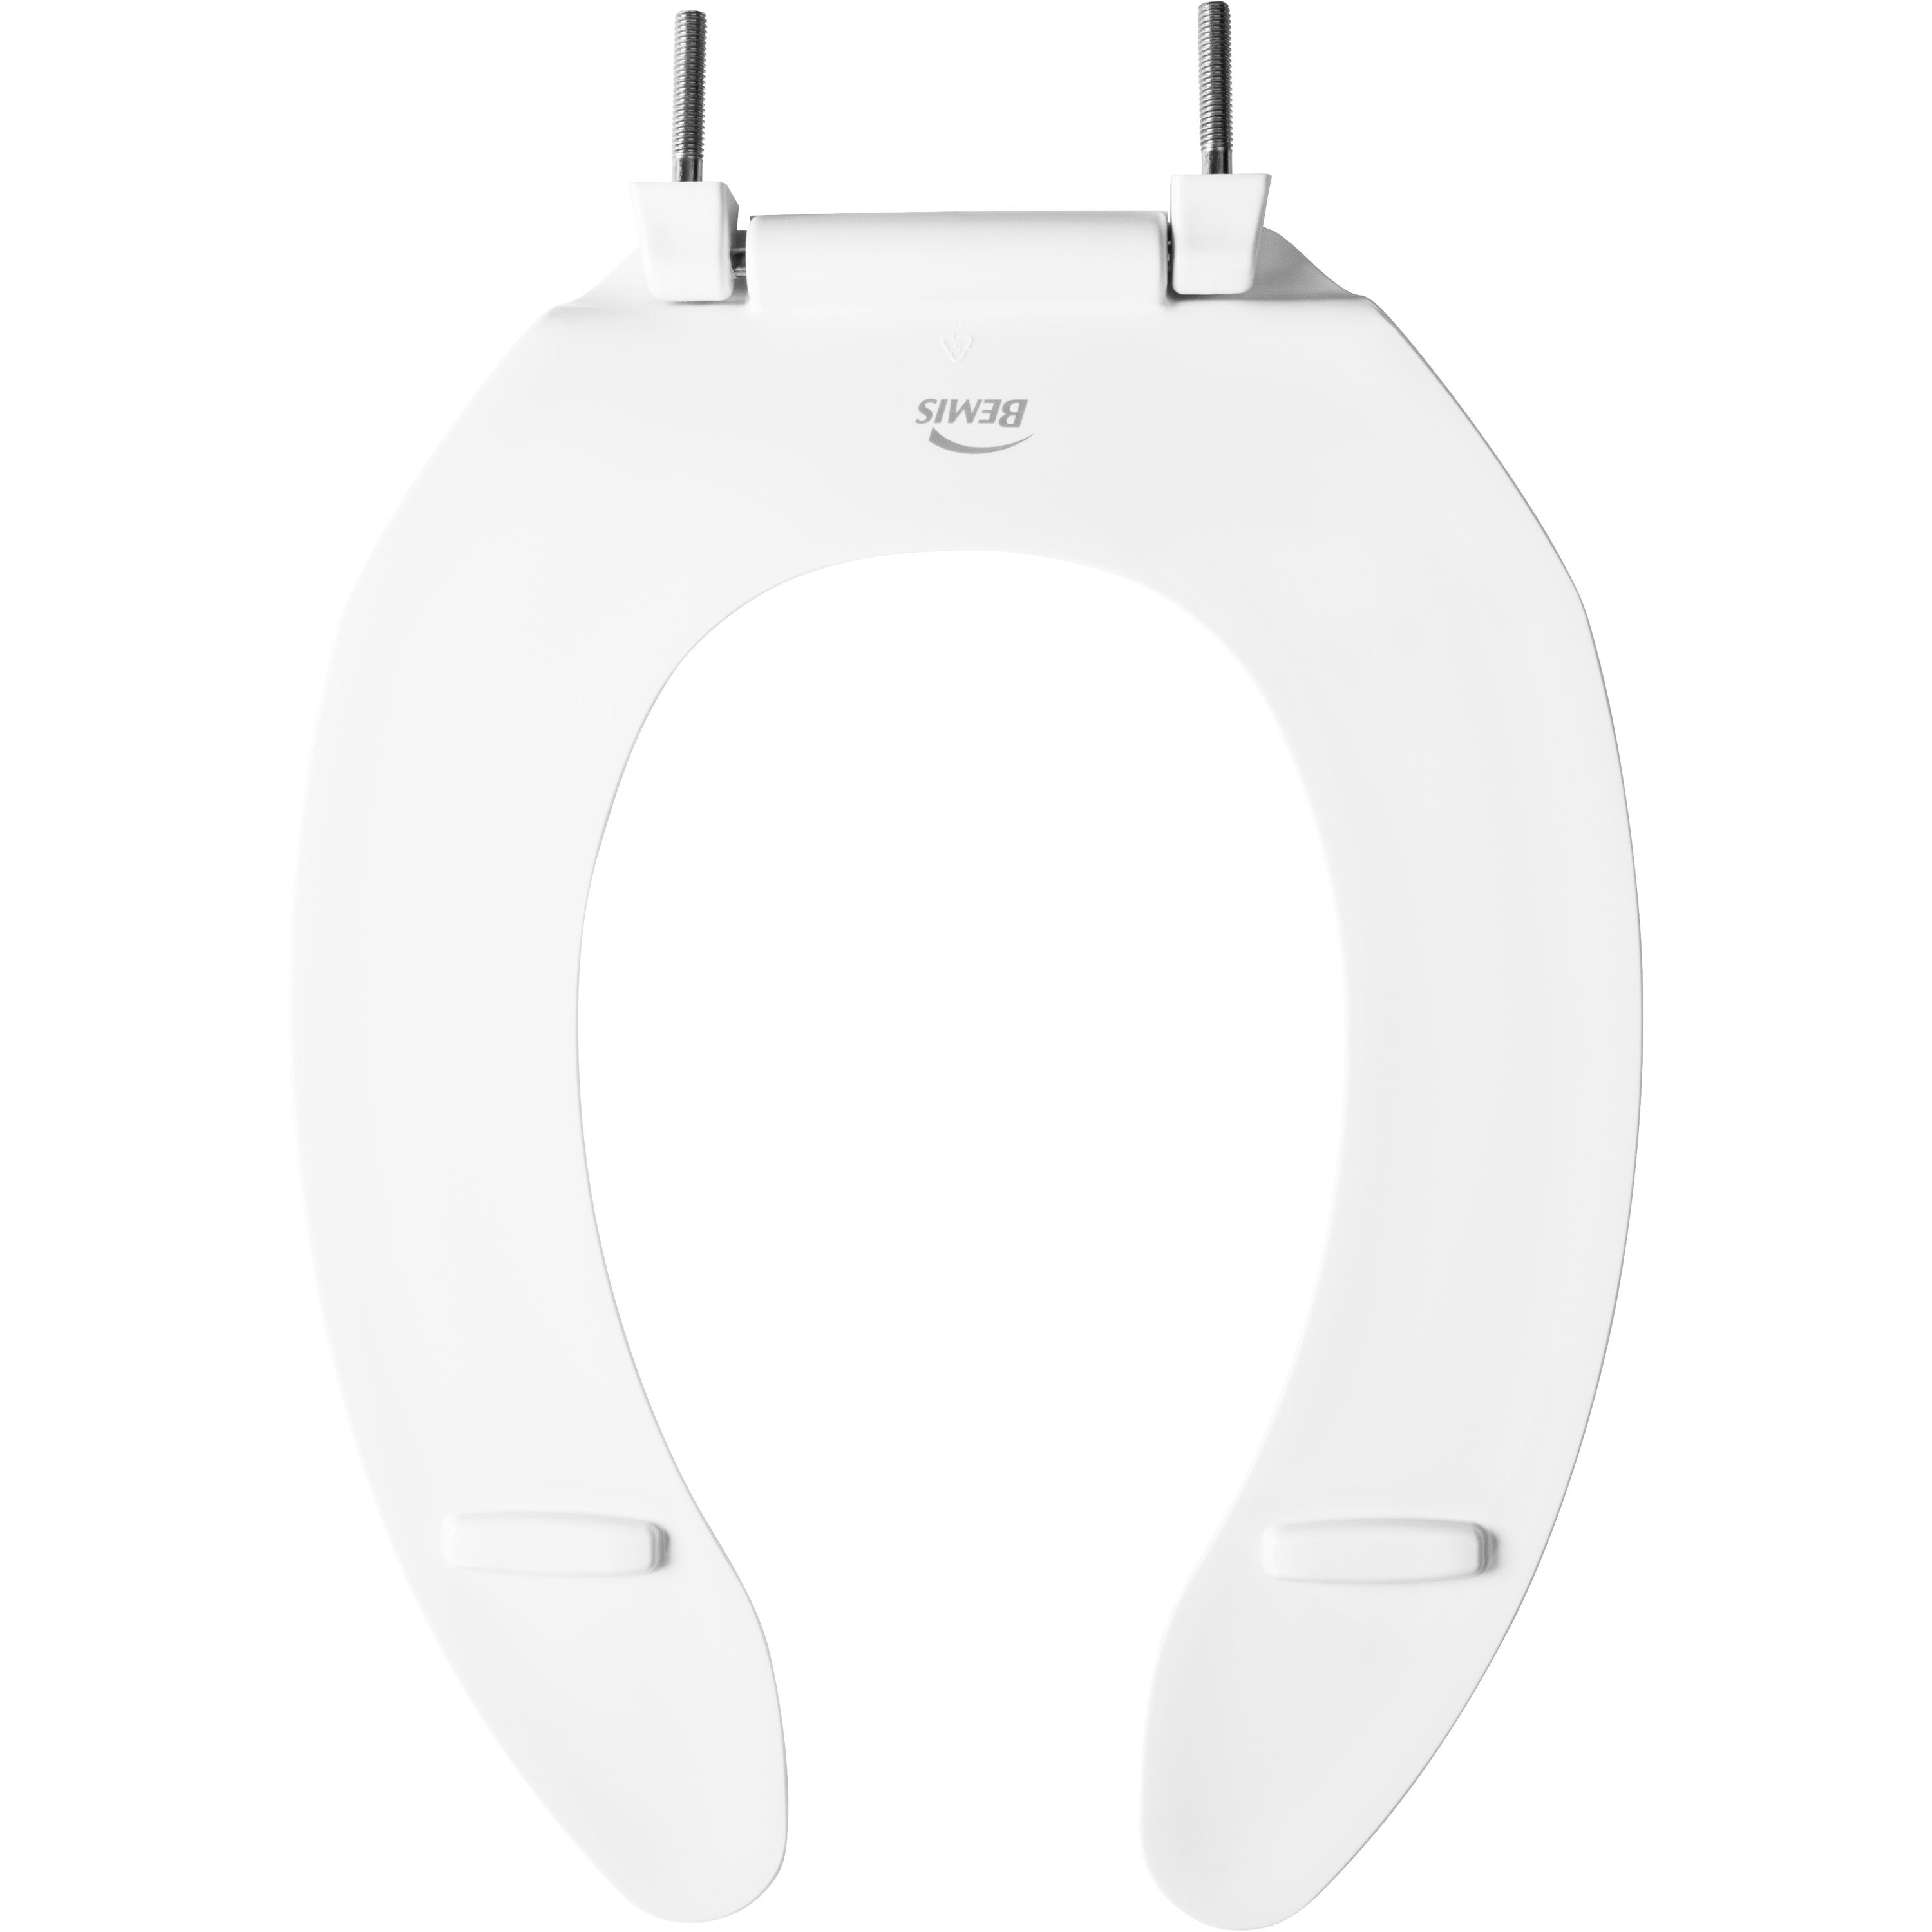 Bemis Lowe's White Elongated Toilet Seat - 1694157 - 19 - Open Box